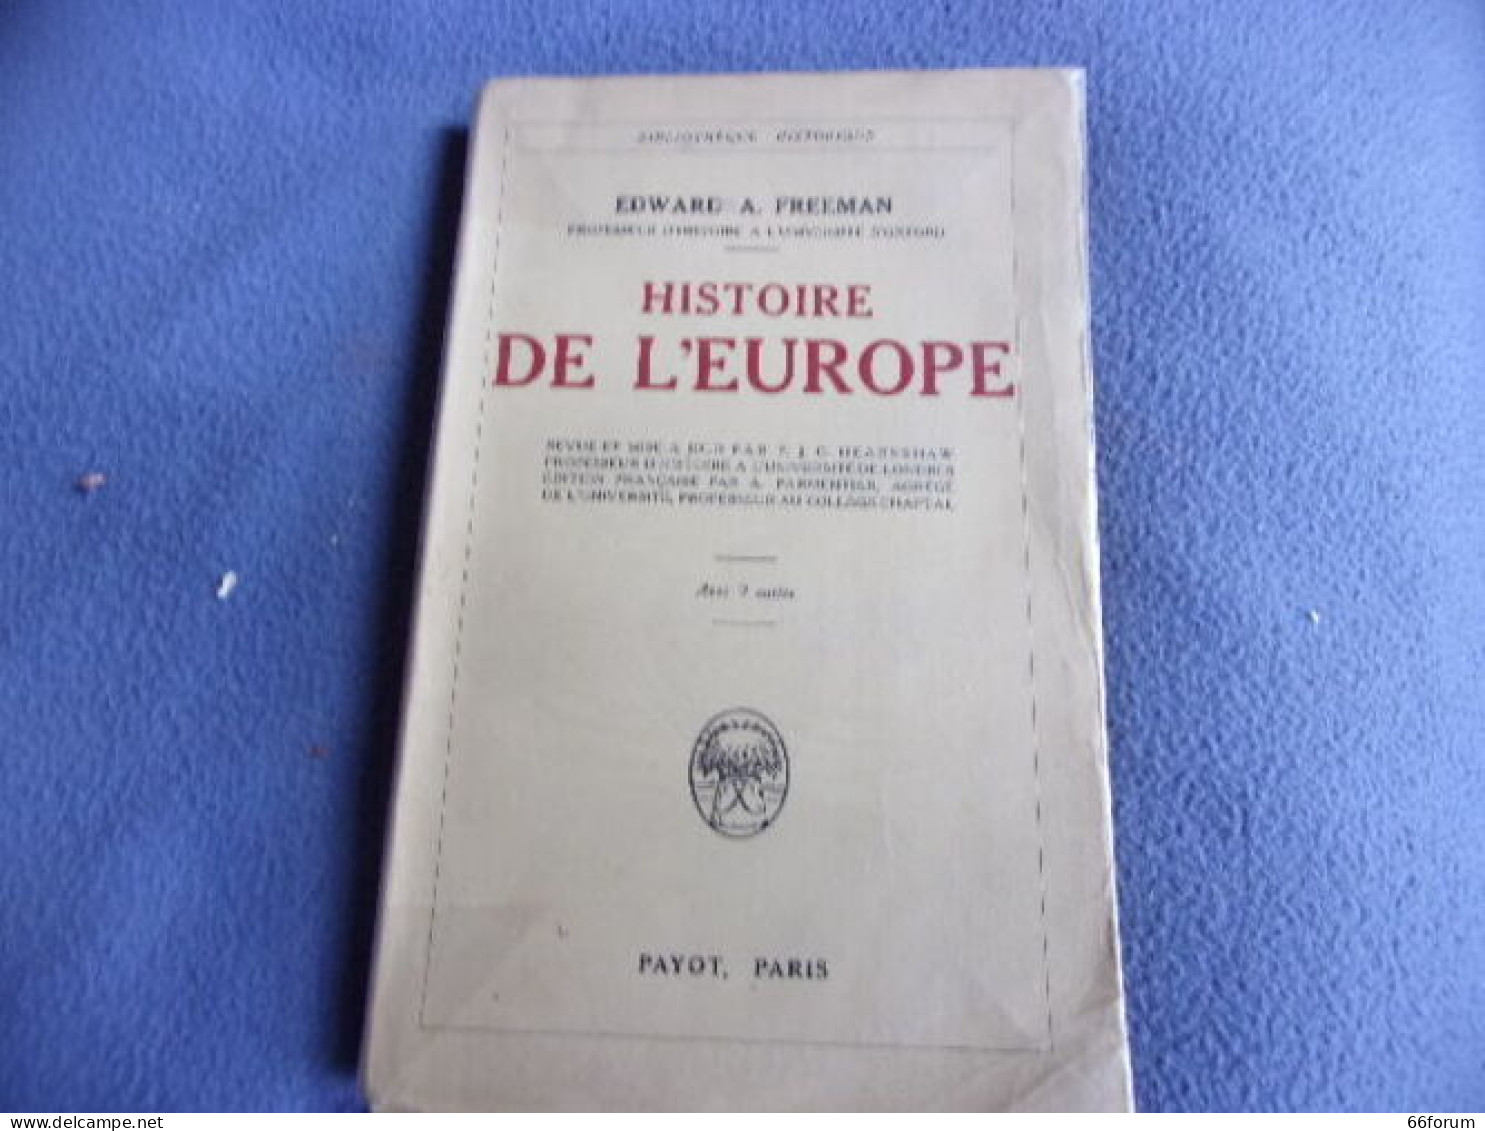 Histoire De L'Europe - Histoire